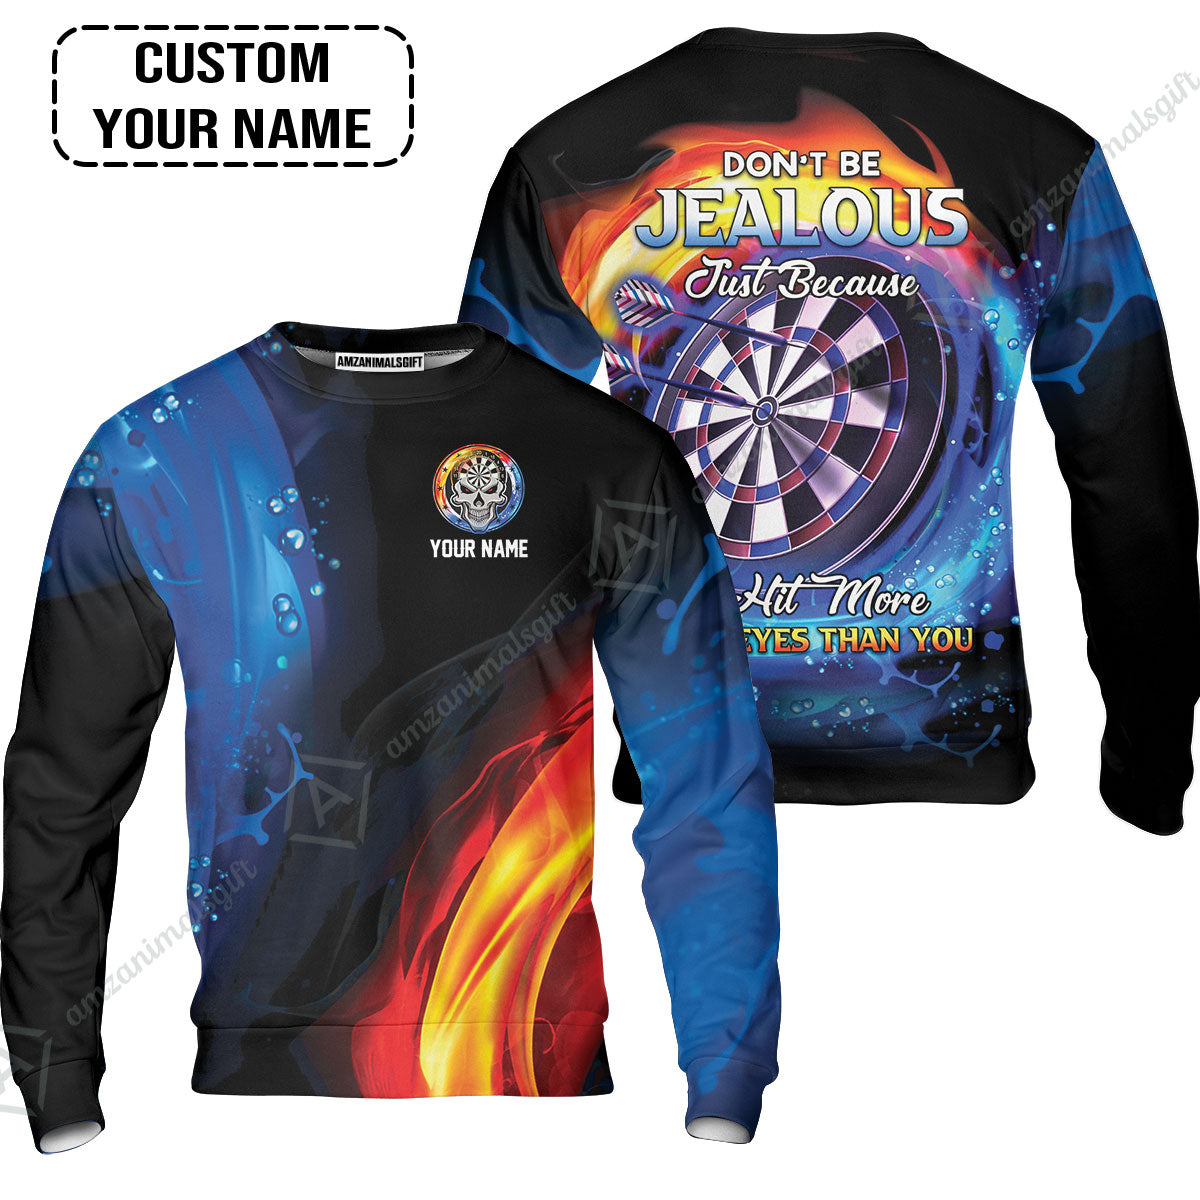 Customized Name Darts Sweatshirt, Don't Be Jealous Personalized Skull Logo And Darts Sweatshirt